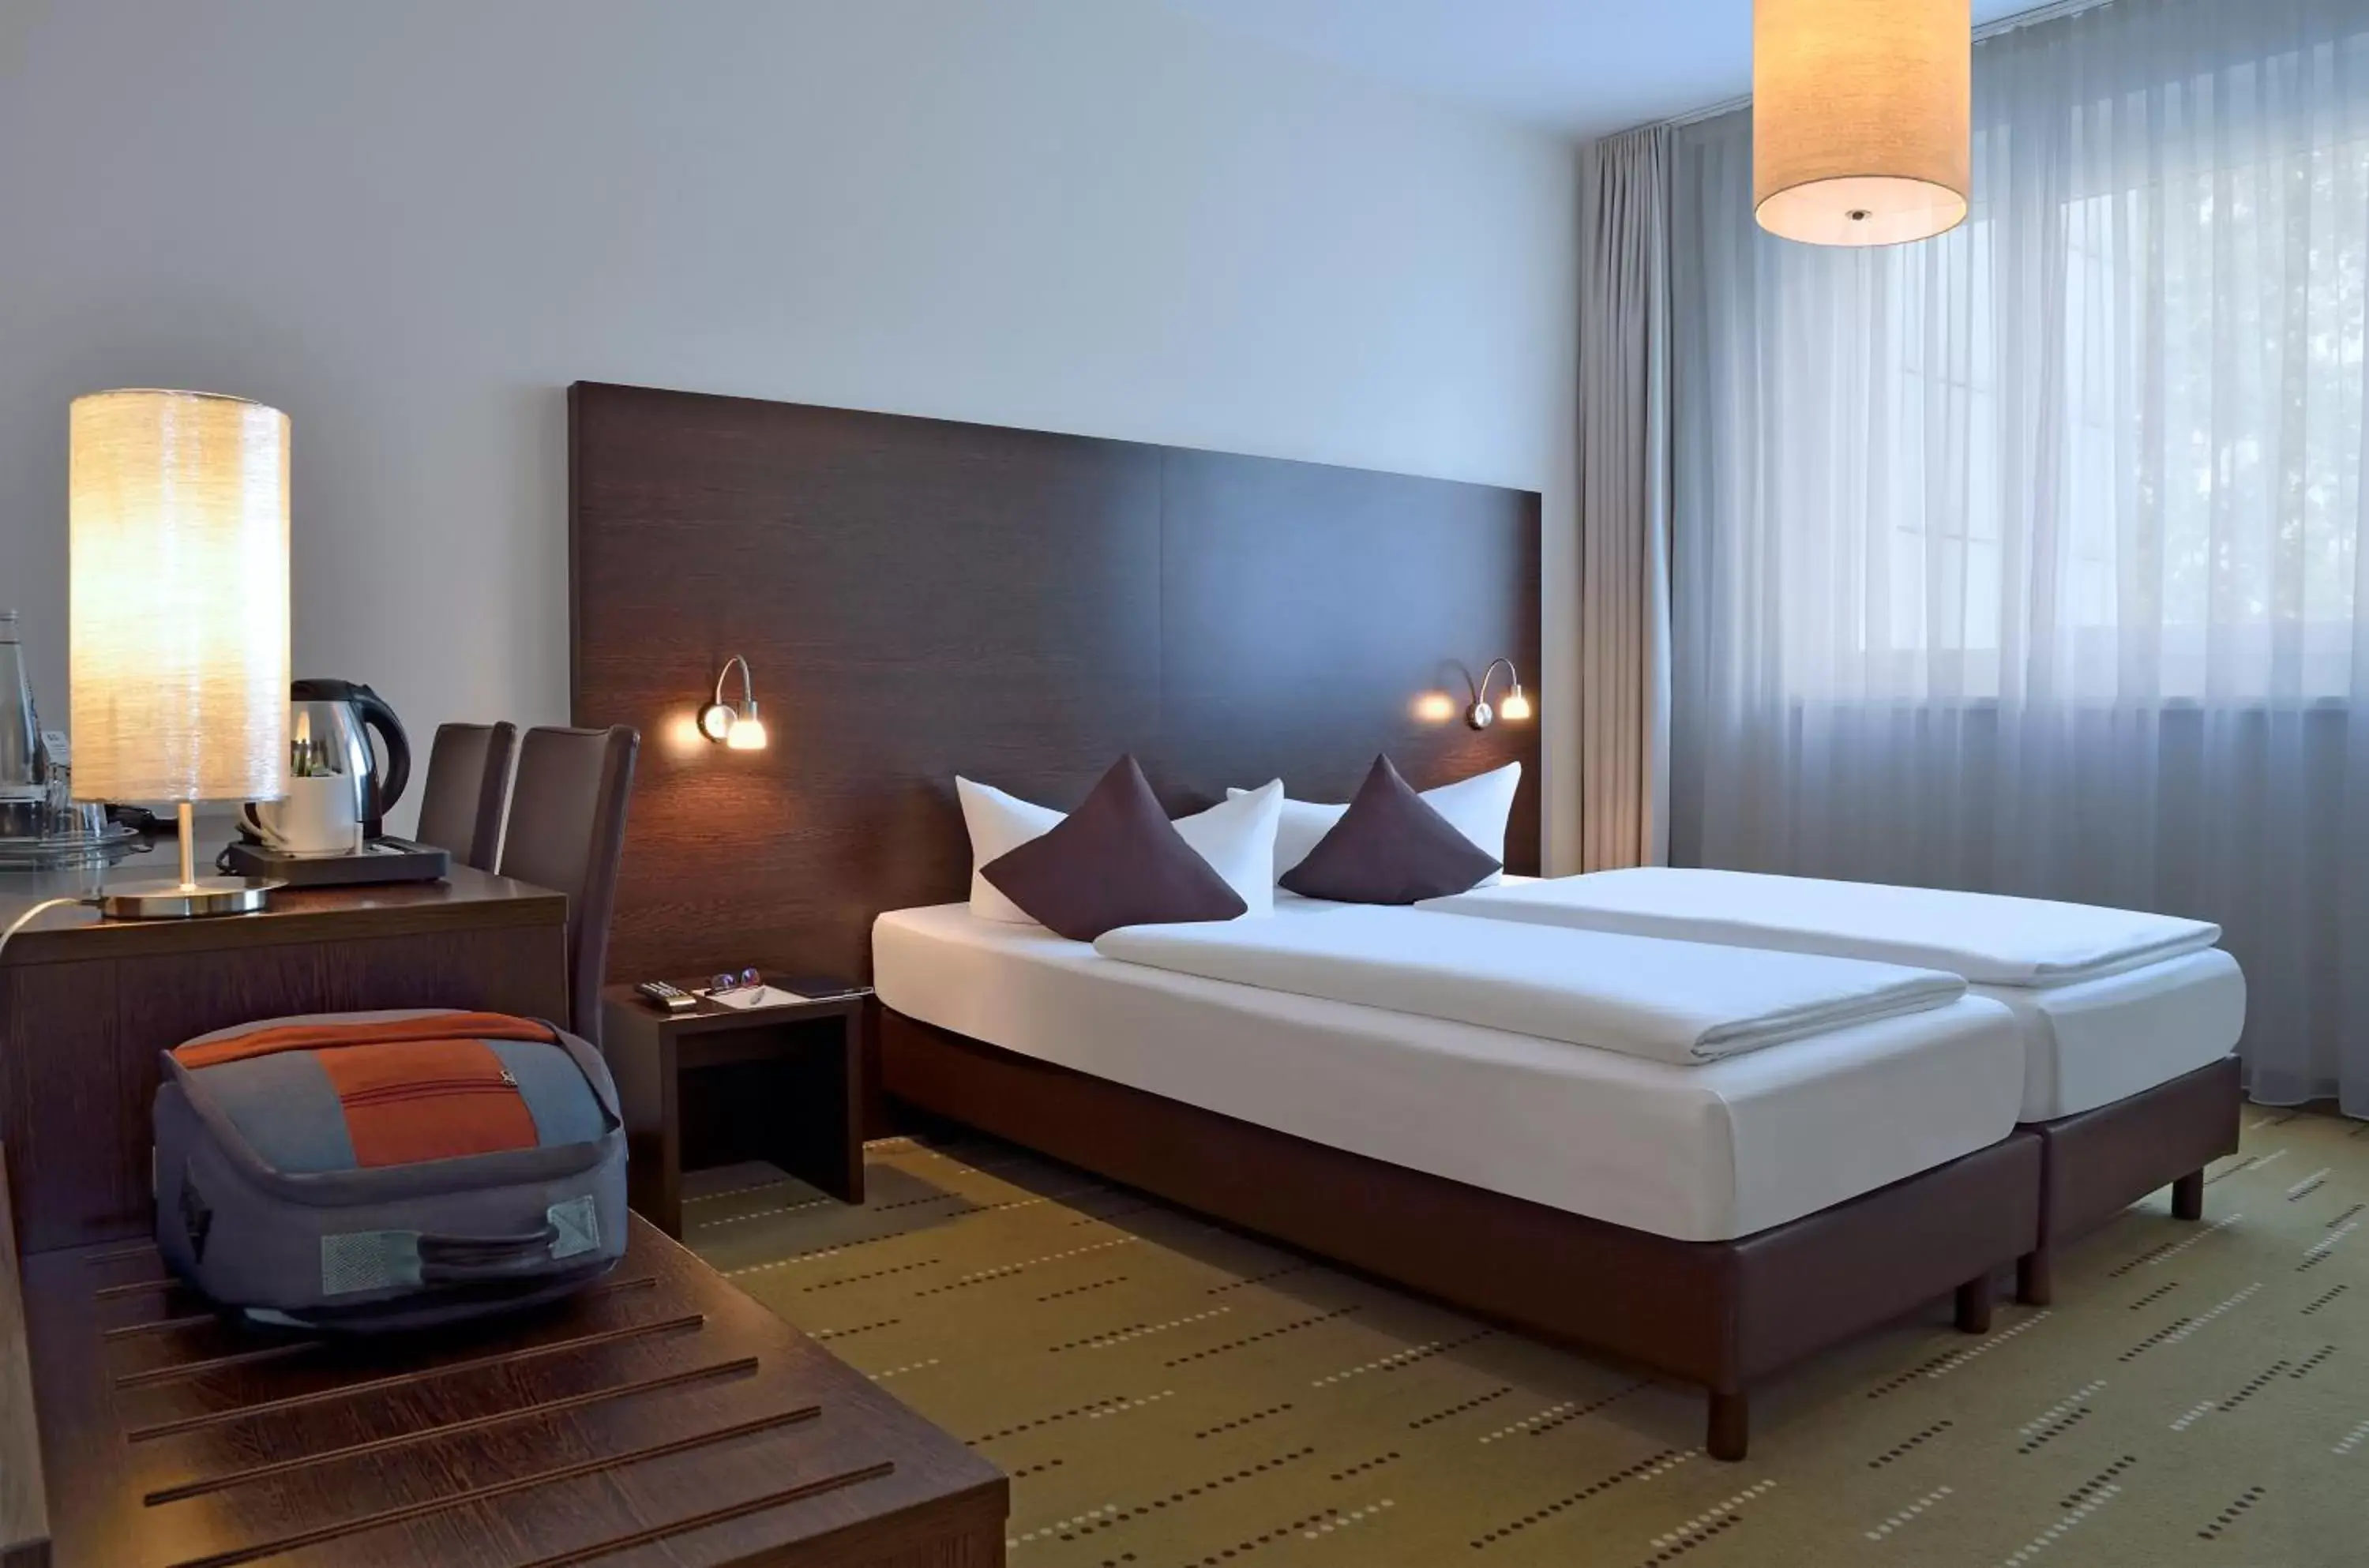 Photo of the whole room, Bed in Best Western Hotel am Spittelmarkt